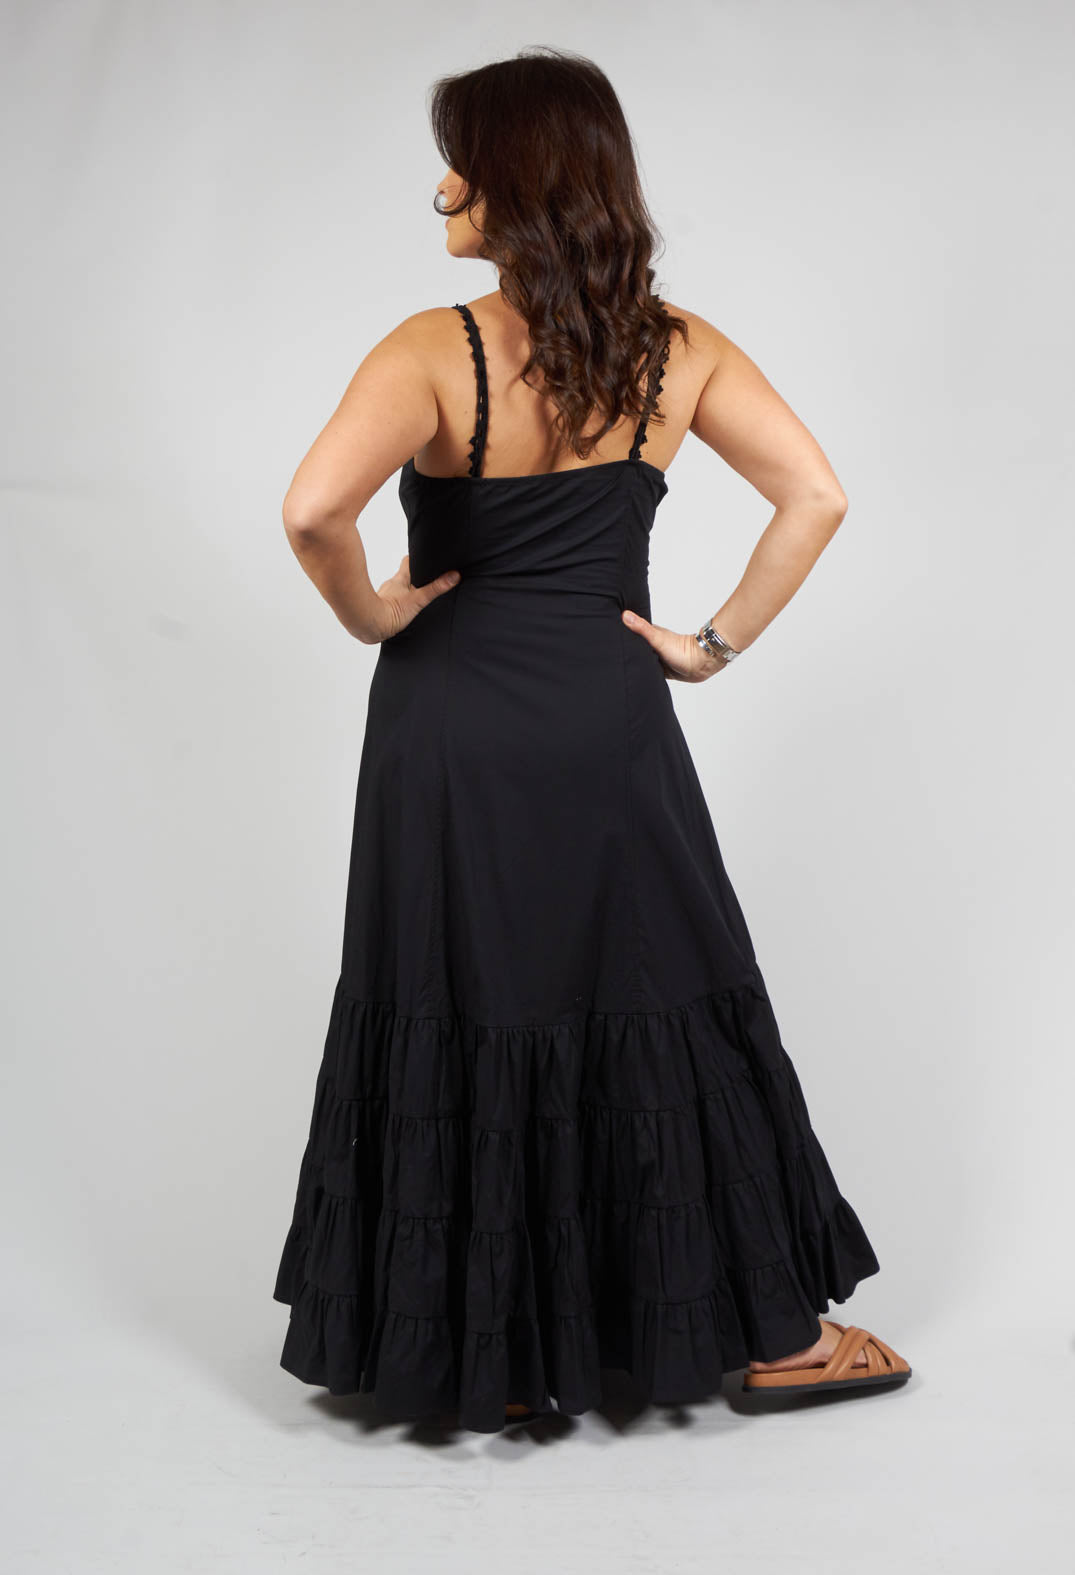 lady wearing a black tiered sleeveless dress